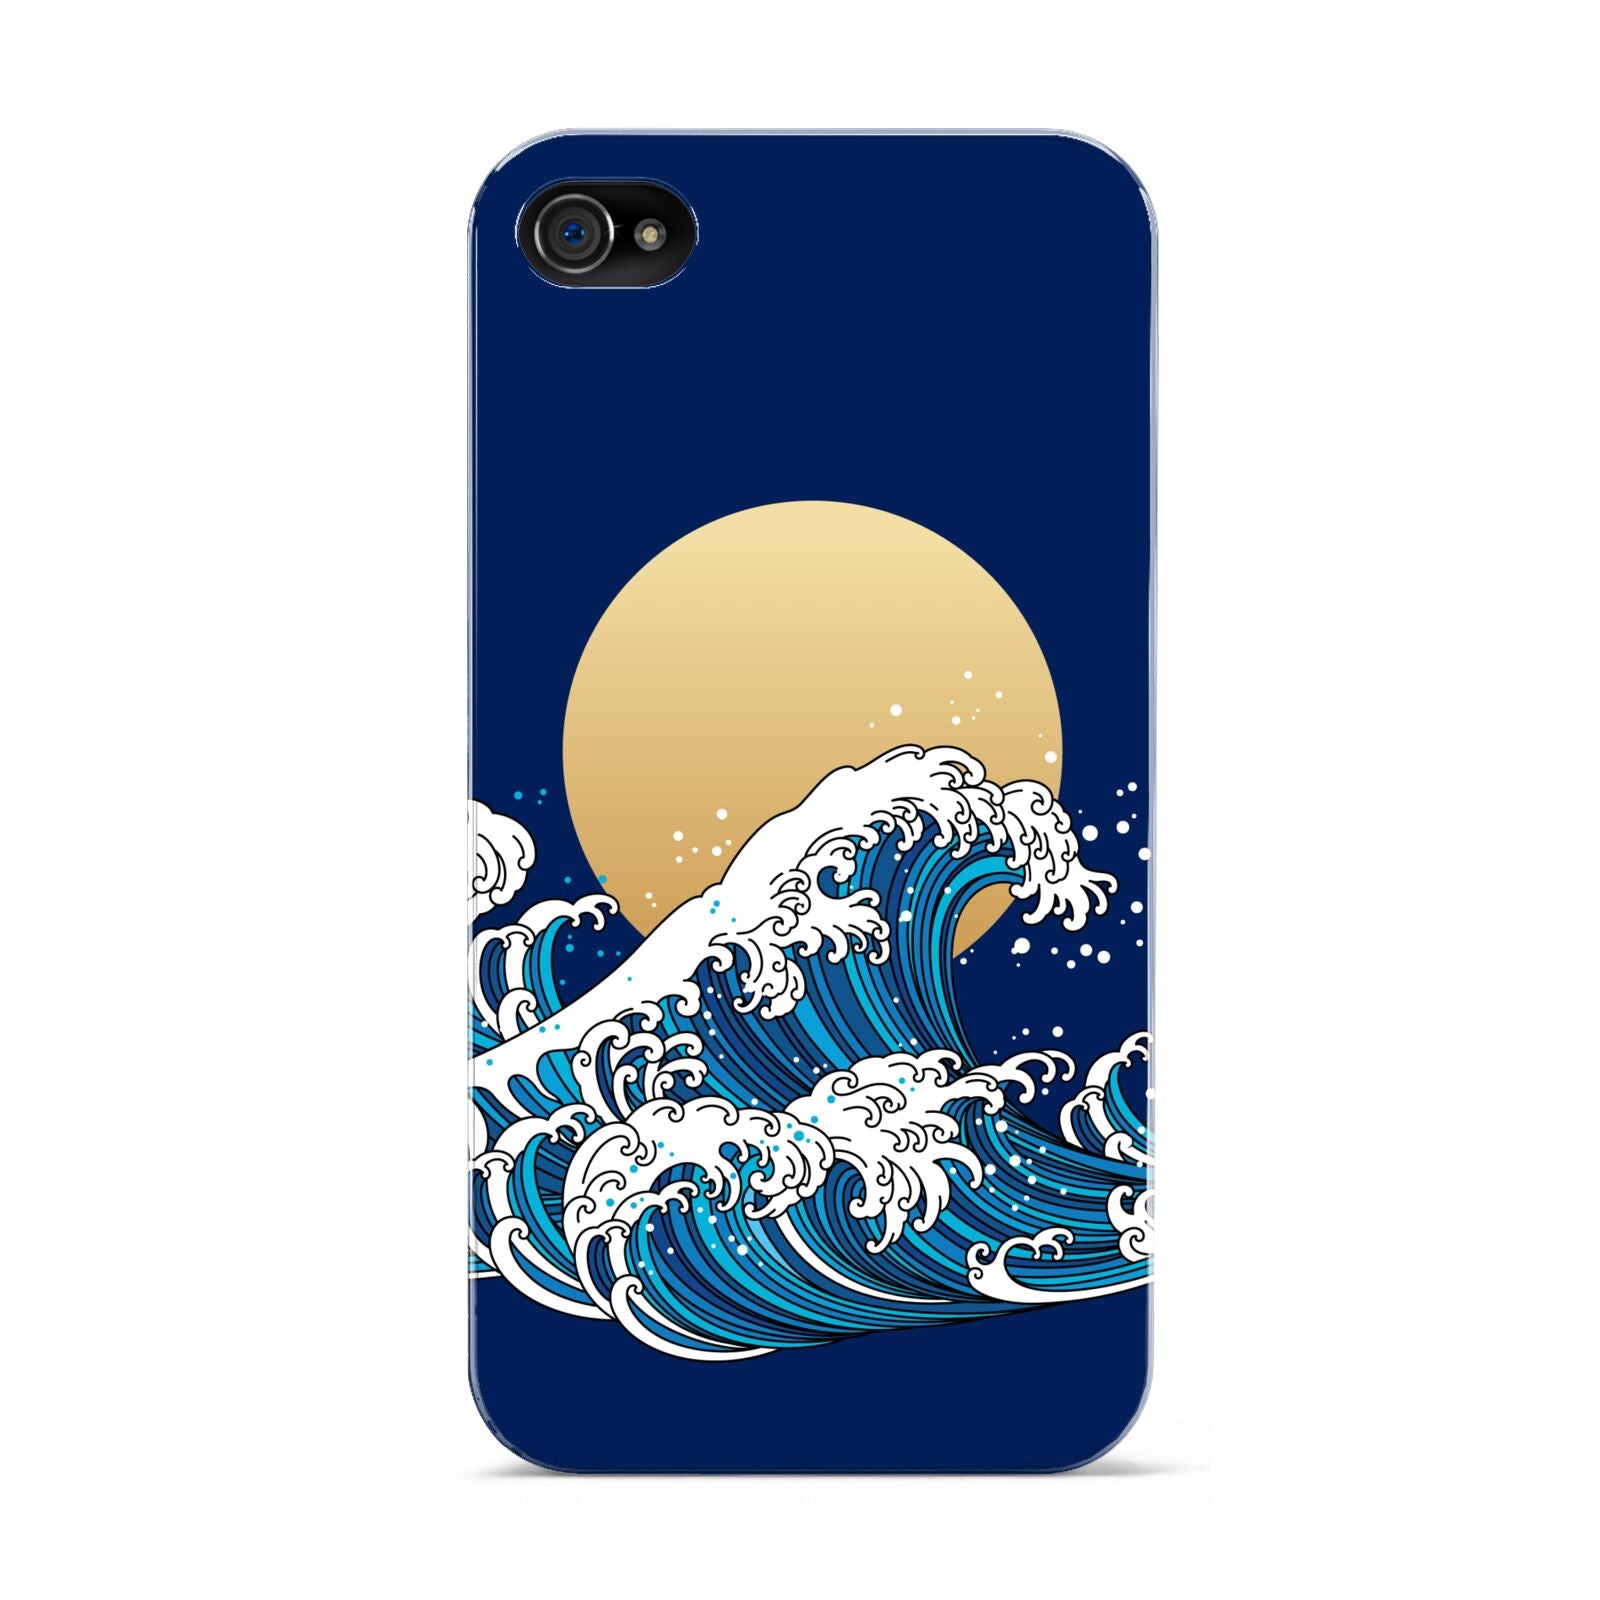 Hokusai Japanese Waves Apple iPhone 4s Case